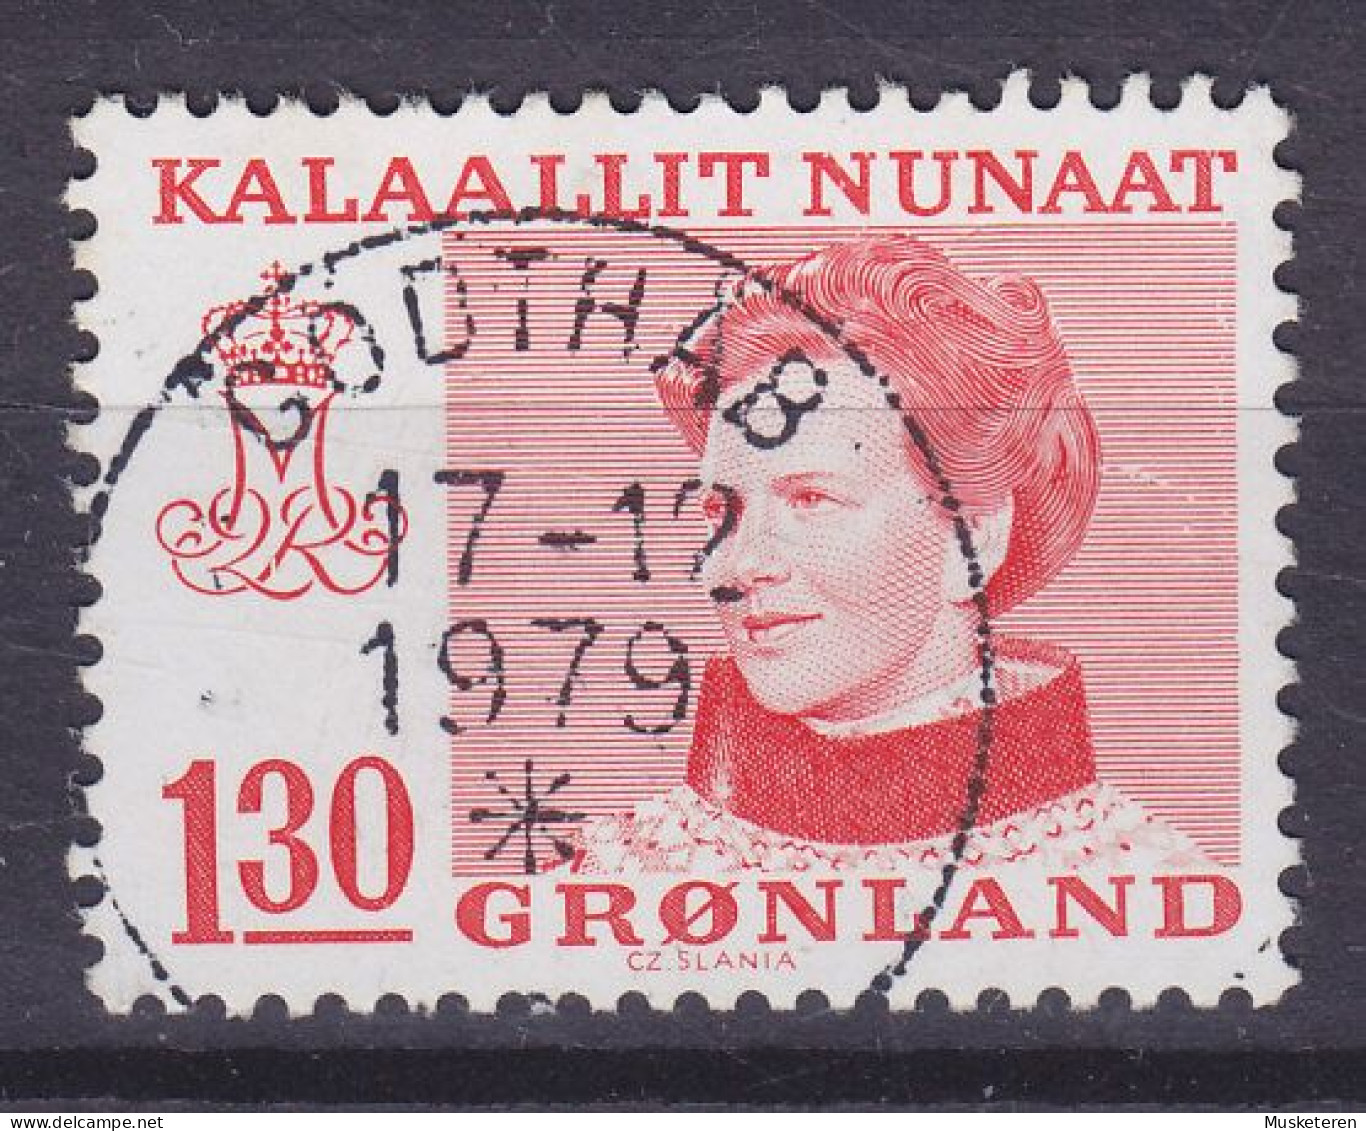 Greenland 1979 Mi. 113, 1.30 (Kr) Queen Margrethe II. (Cz. Slania) Deluxe GODTHÅB Cancel !! - Usati